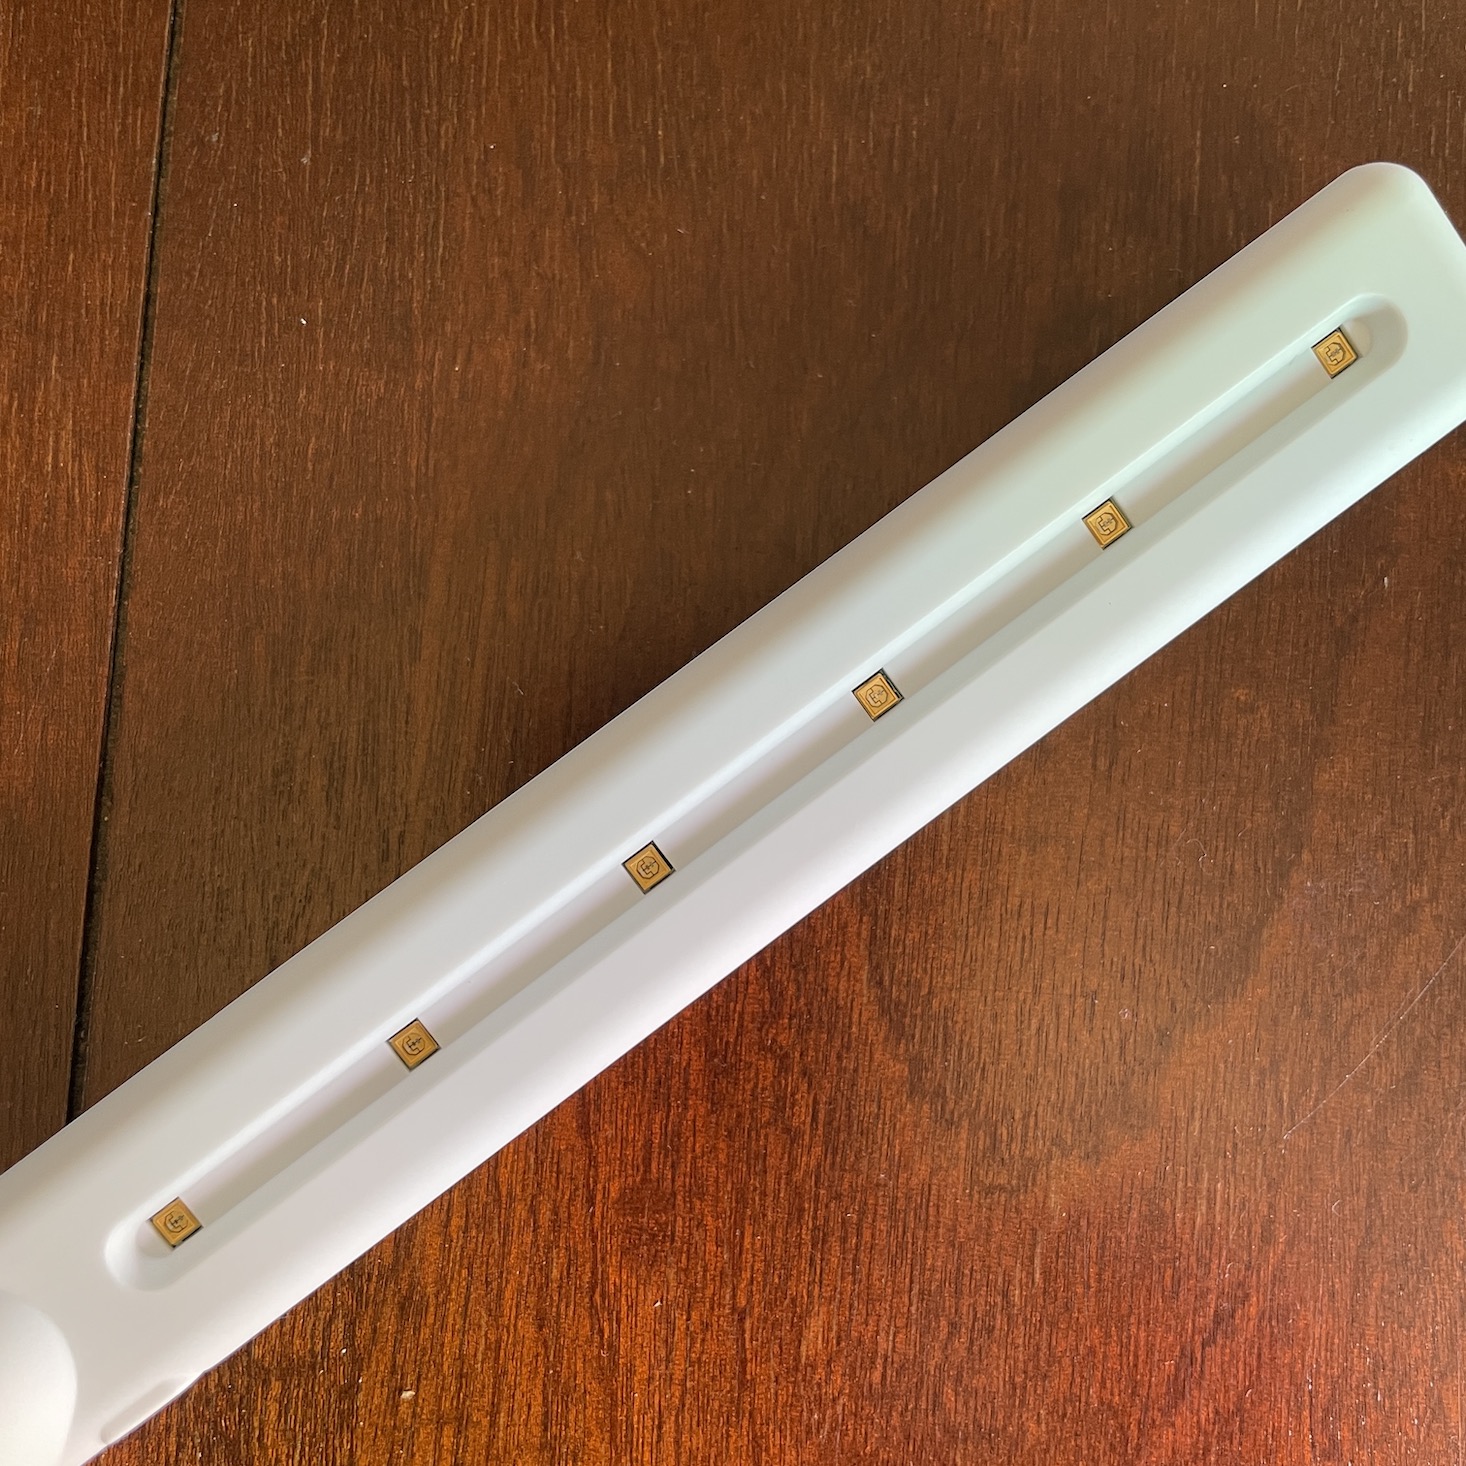 Lume UV sanitizing wand from BREO Box Spring 2022